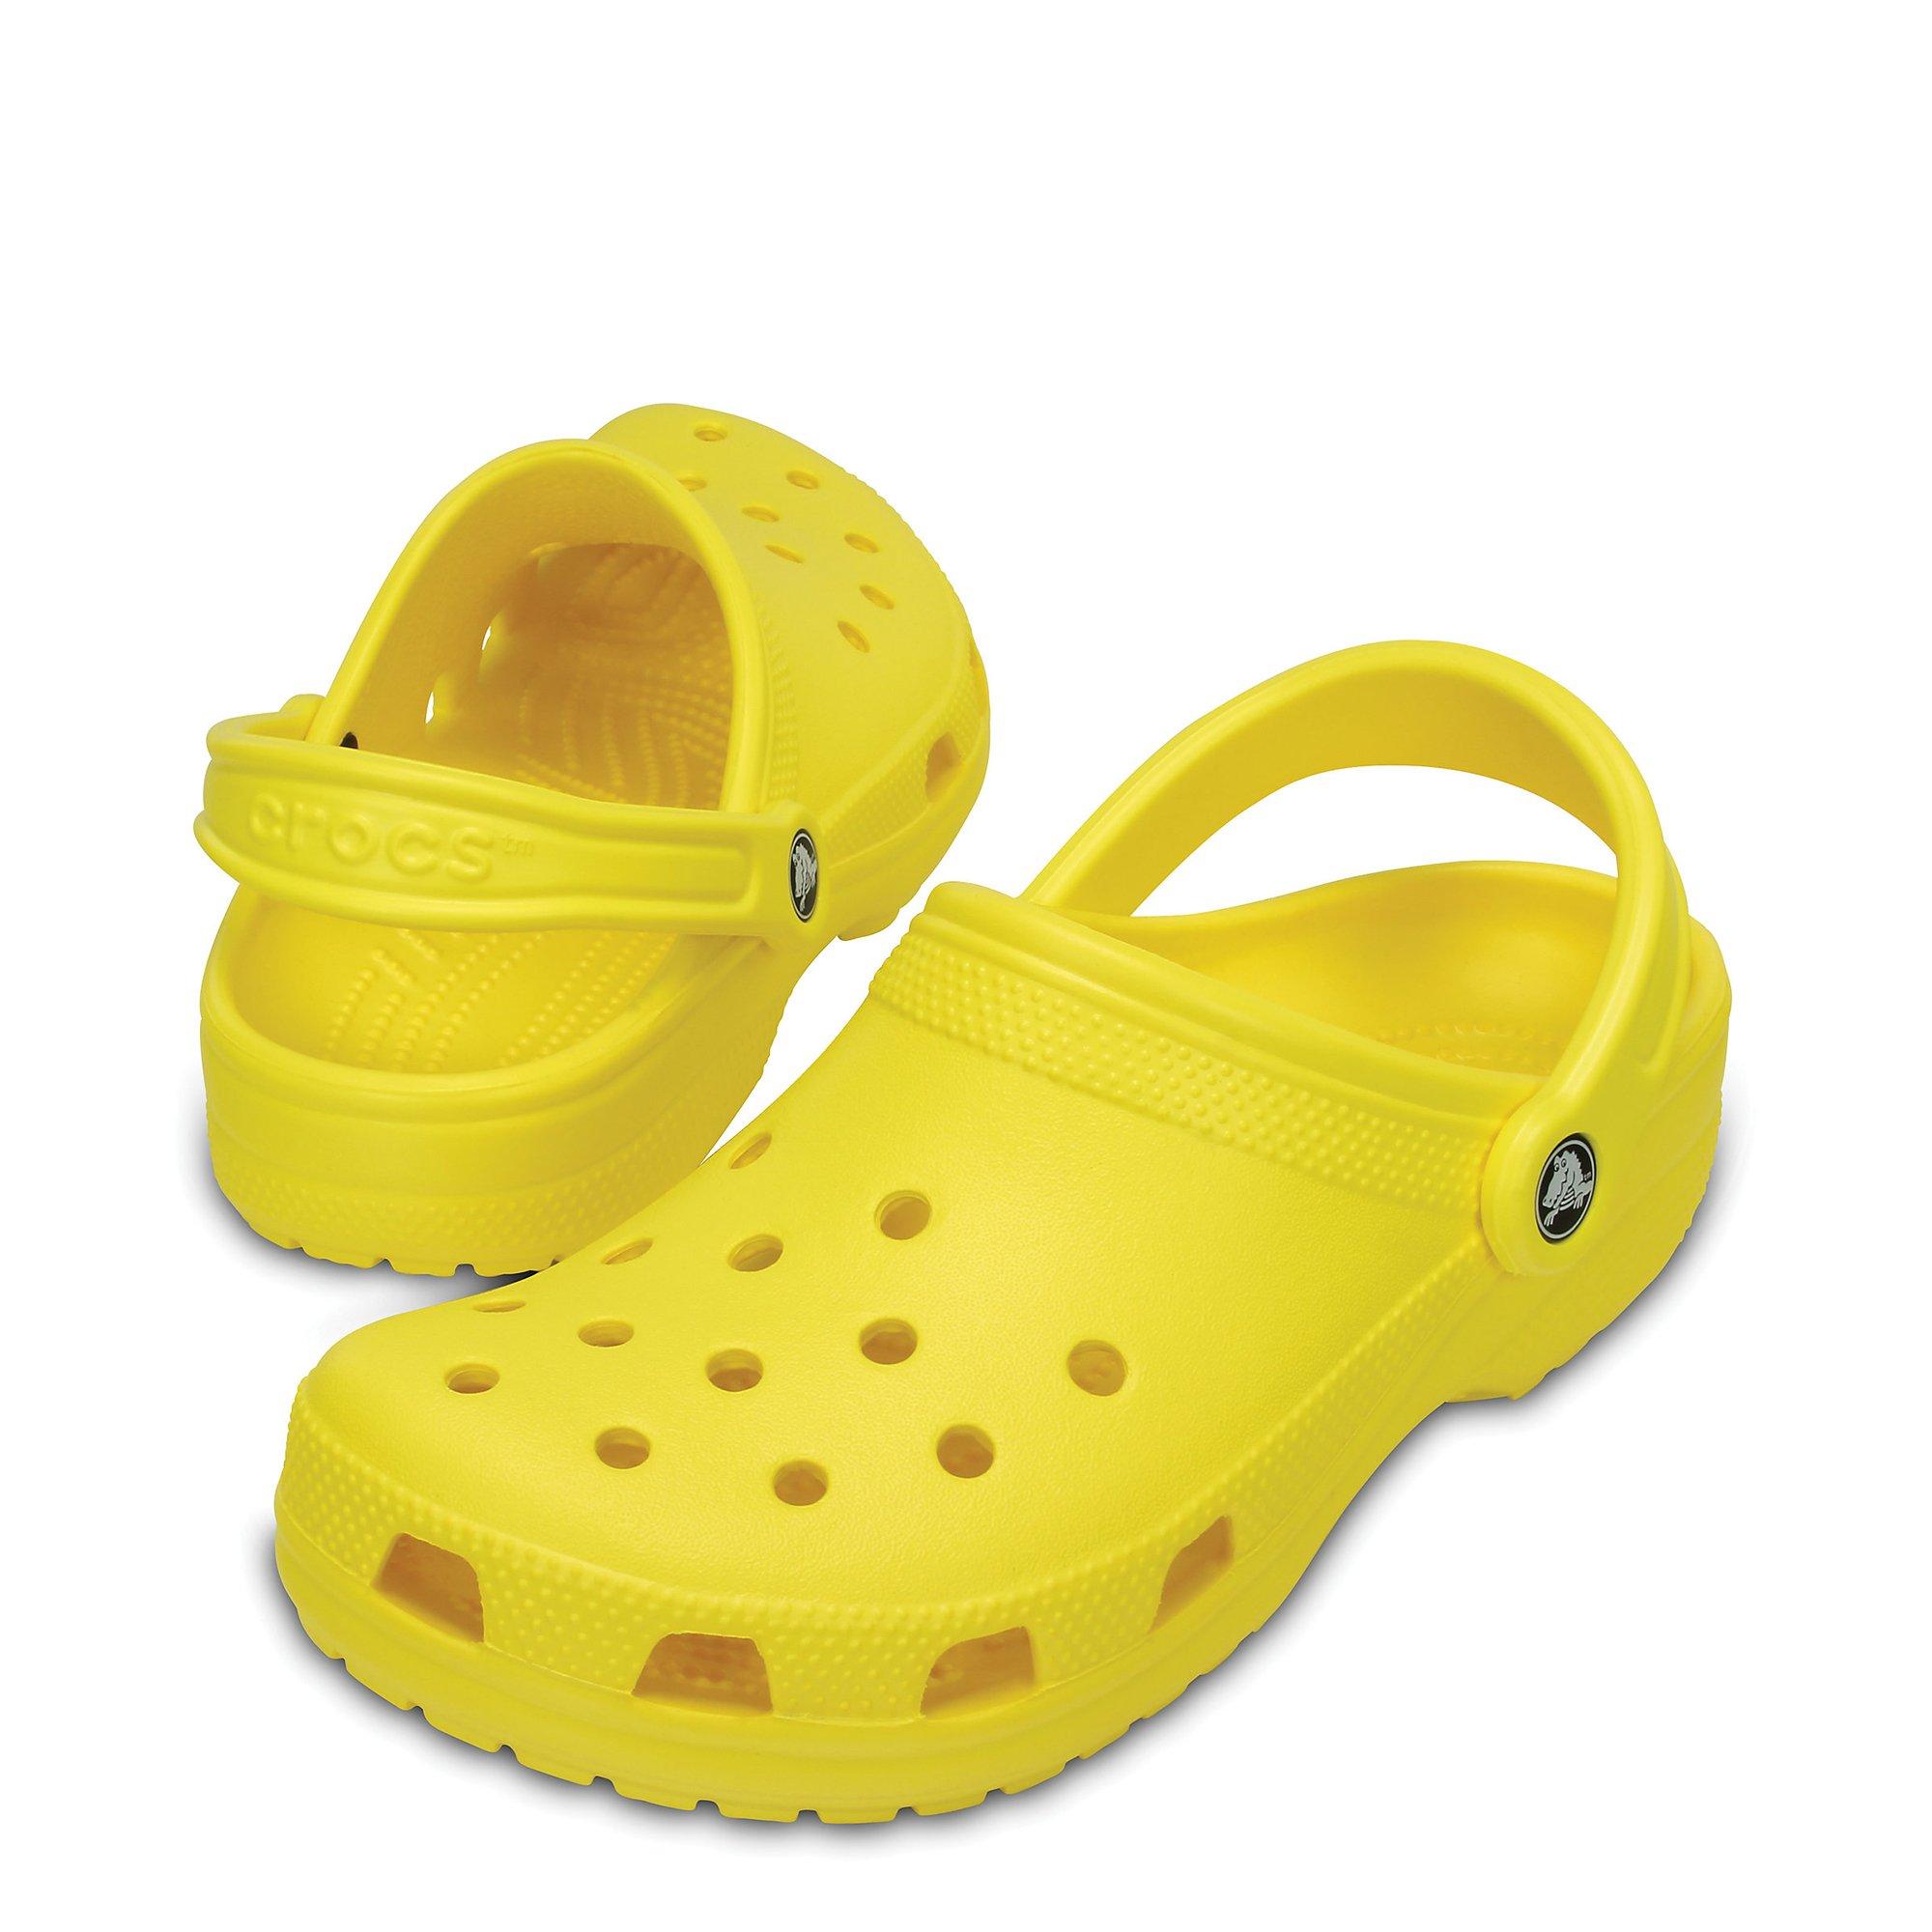 where can i buy yellow crocs